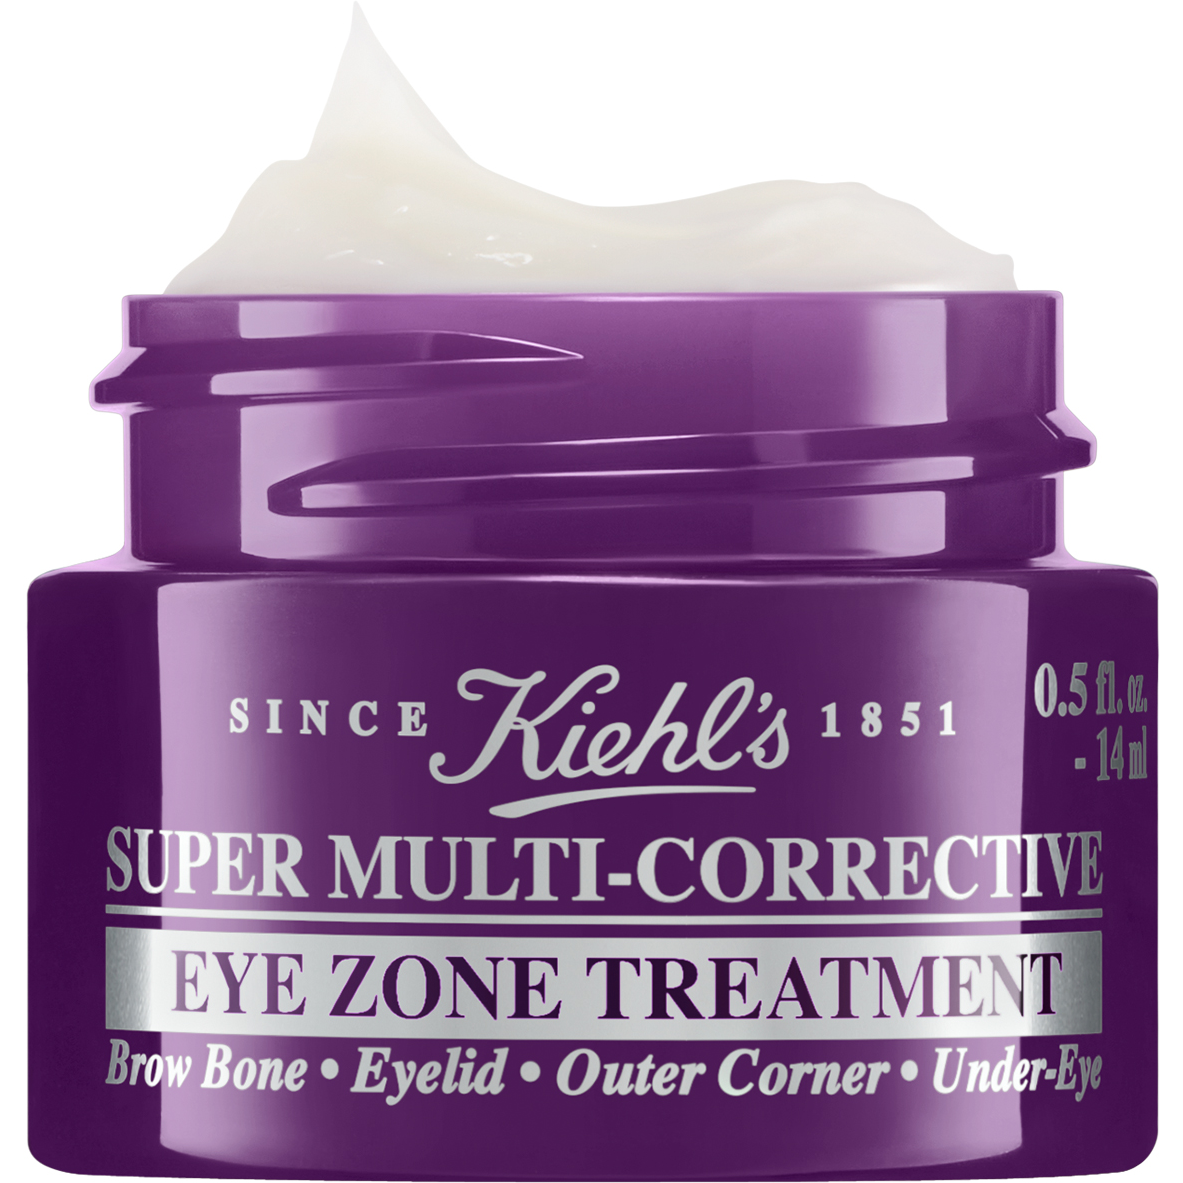 Kiehl's Super Multi Corrective Eye Zone Treatment 14 ml